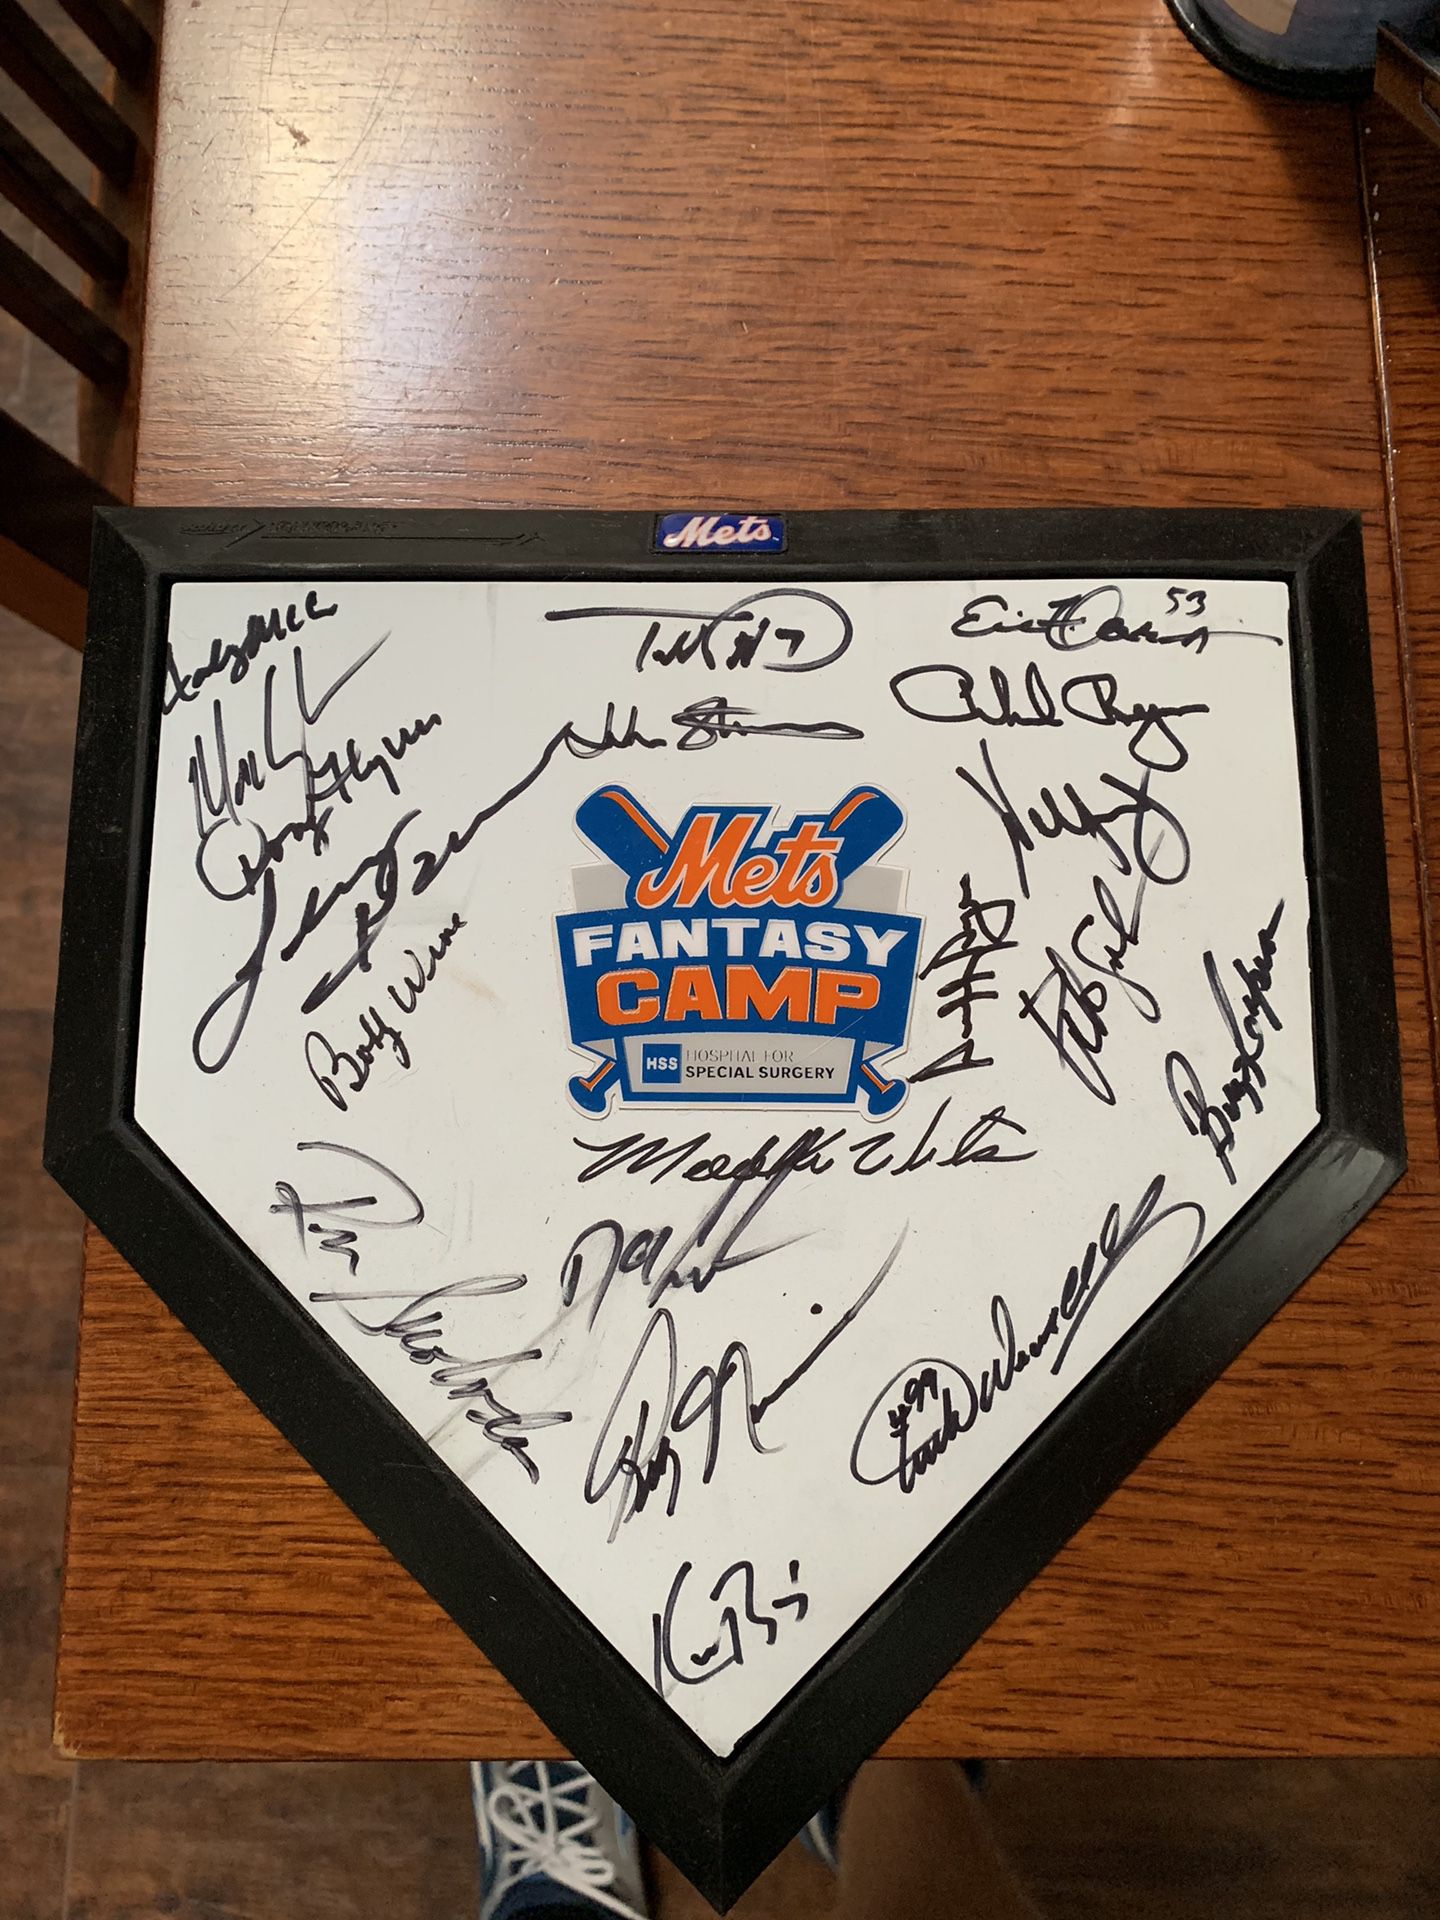 Autographed baseball home plate